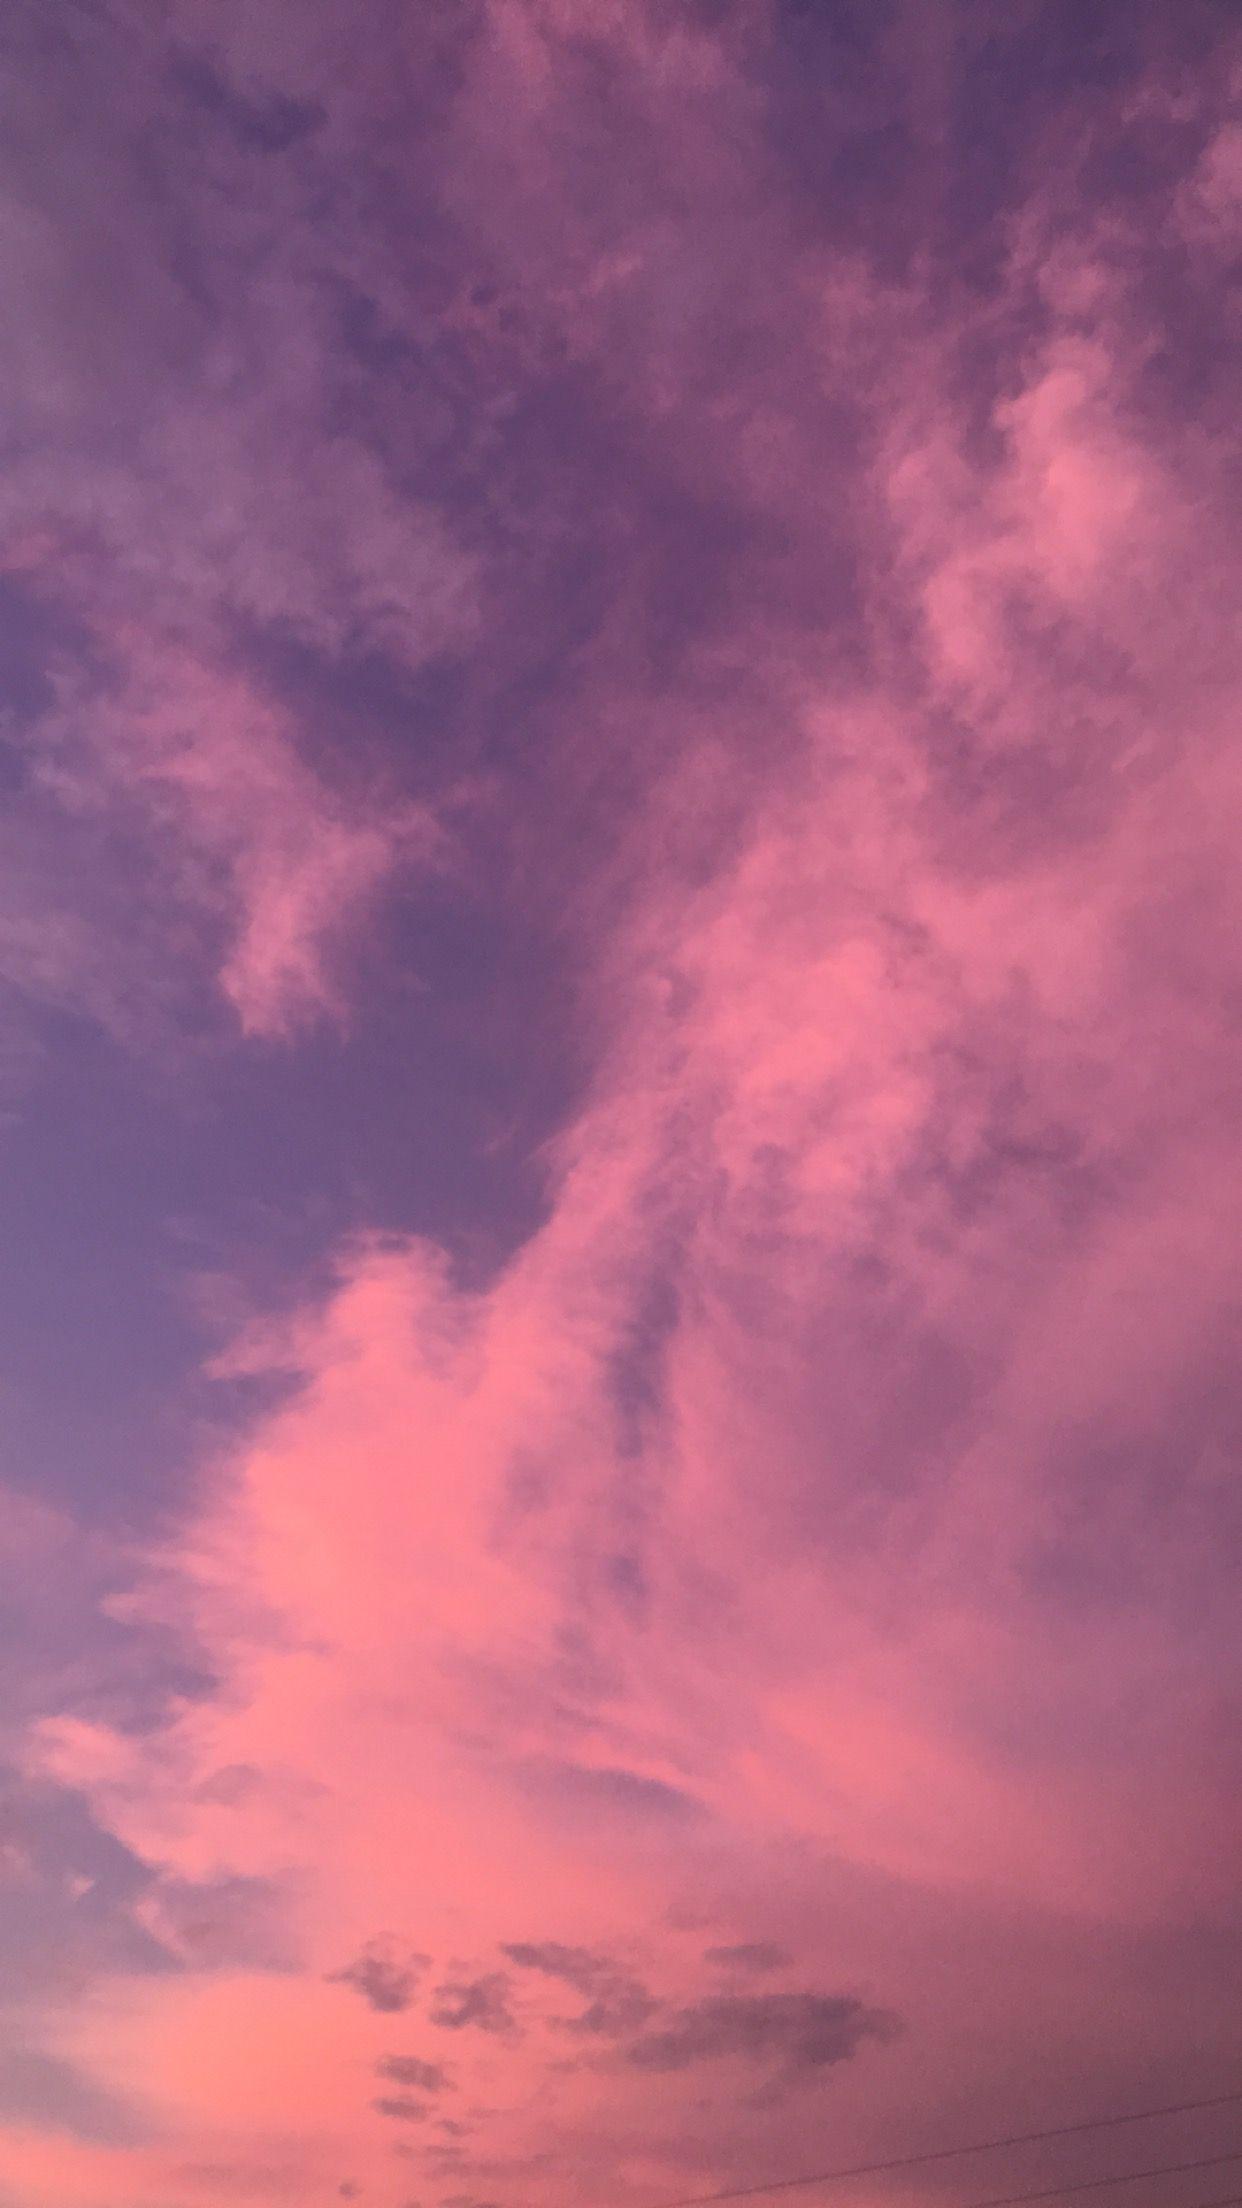 iPhone wallpaper. iPhone wallpaper sky, Sky